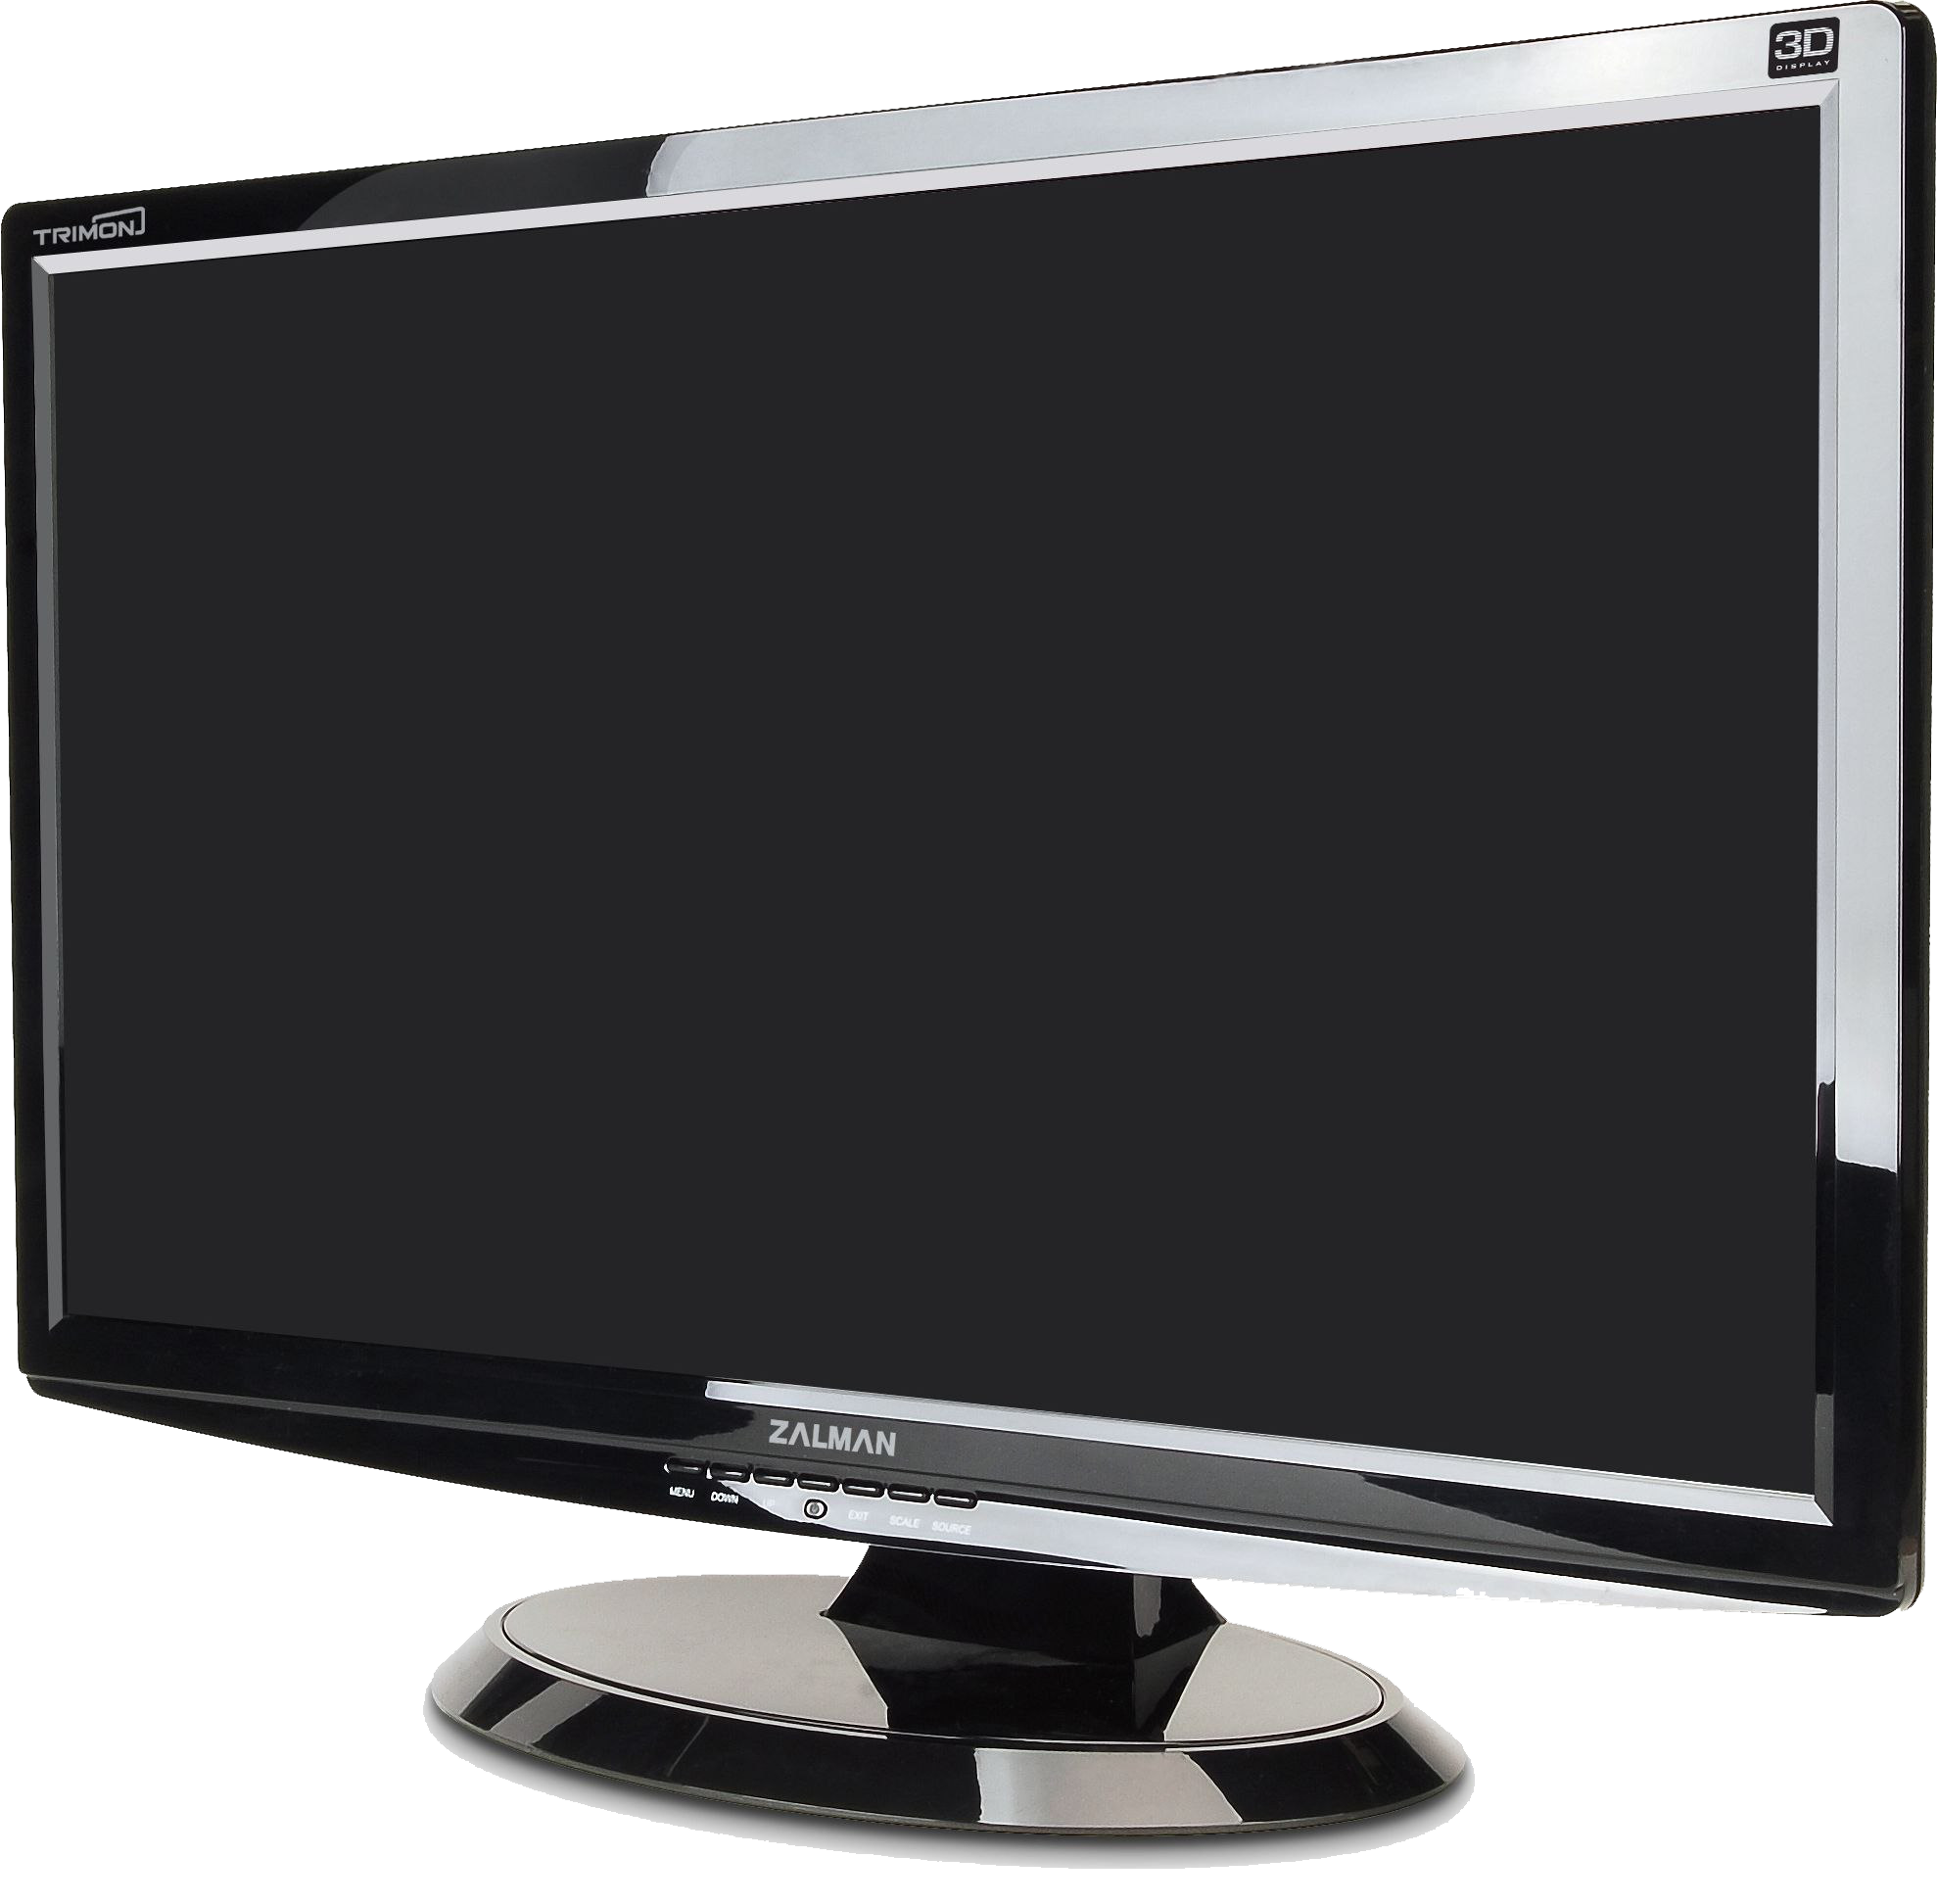 LED Computer Monitor PNG Free Image